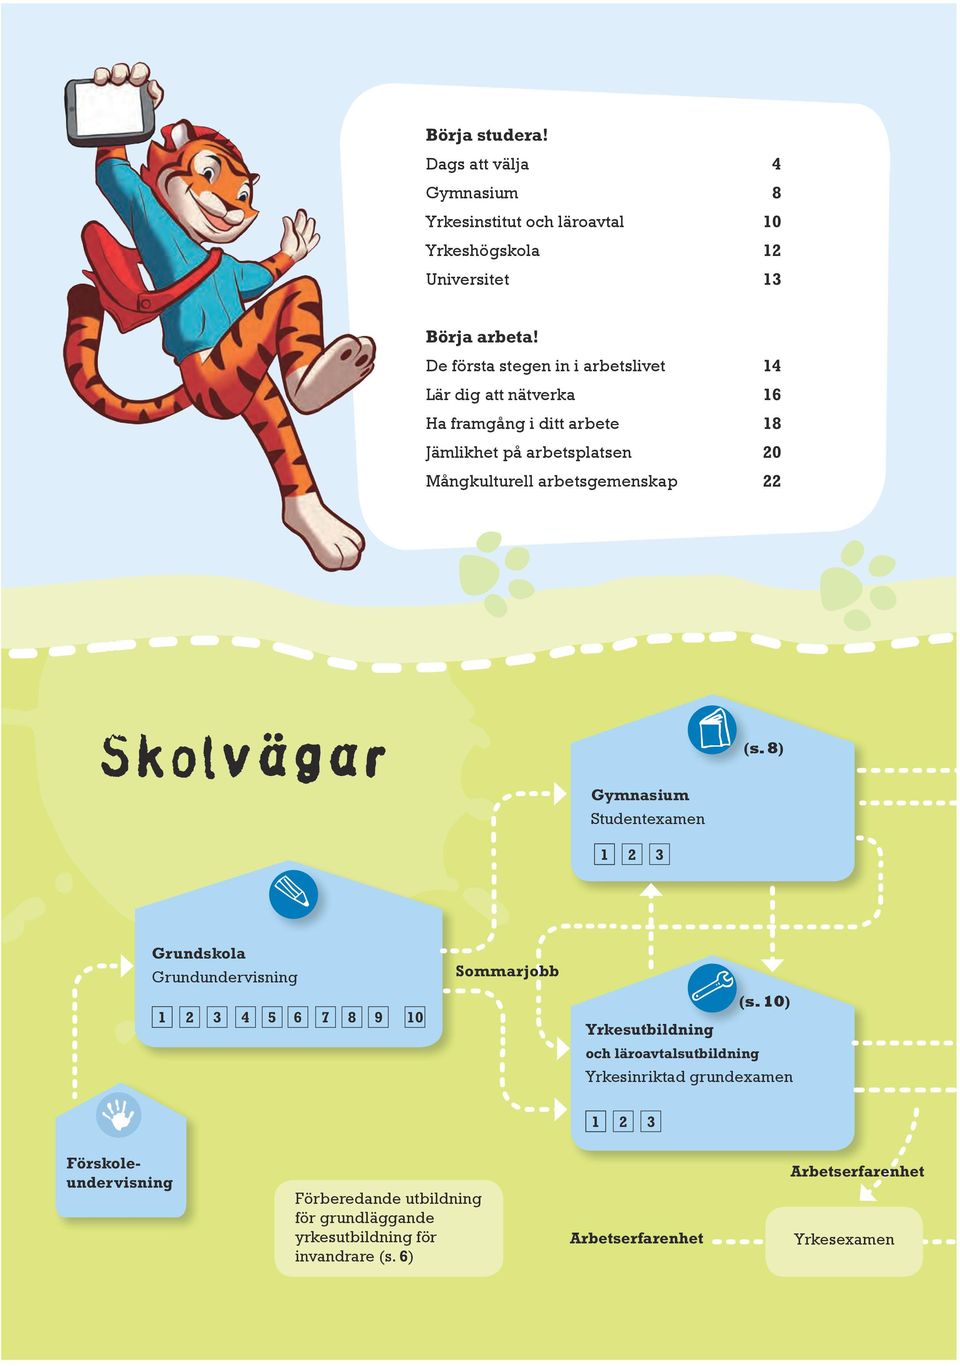 Skolvägar Gymnasium Studentexamen 1 2 3 (s. 8) Grundskola Grundundervisning 1 2 3 4 5 6 7 8 9 10 Sommarjobb (s.